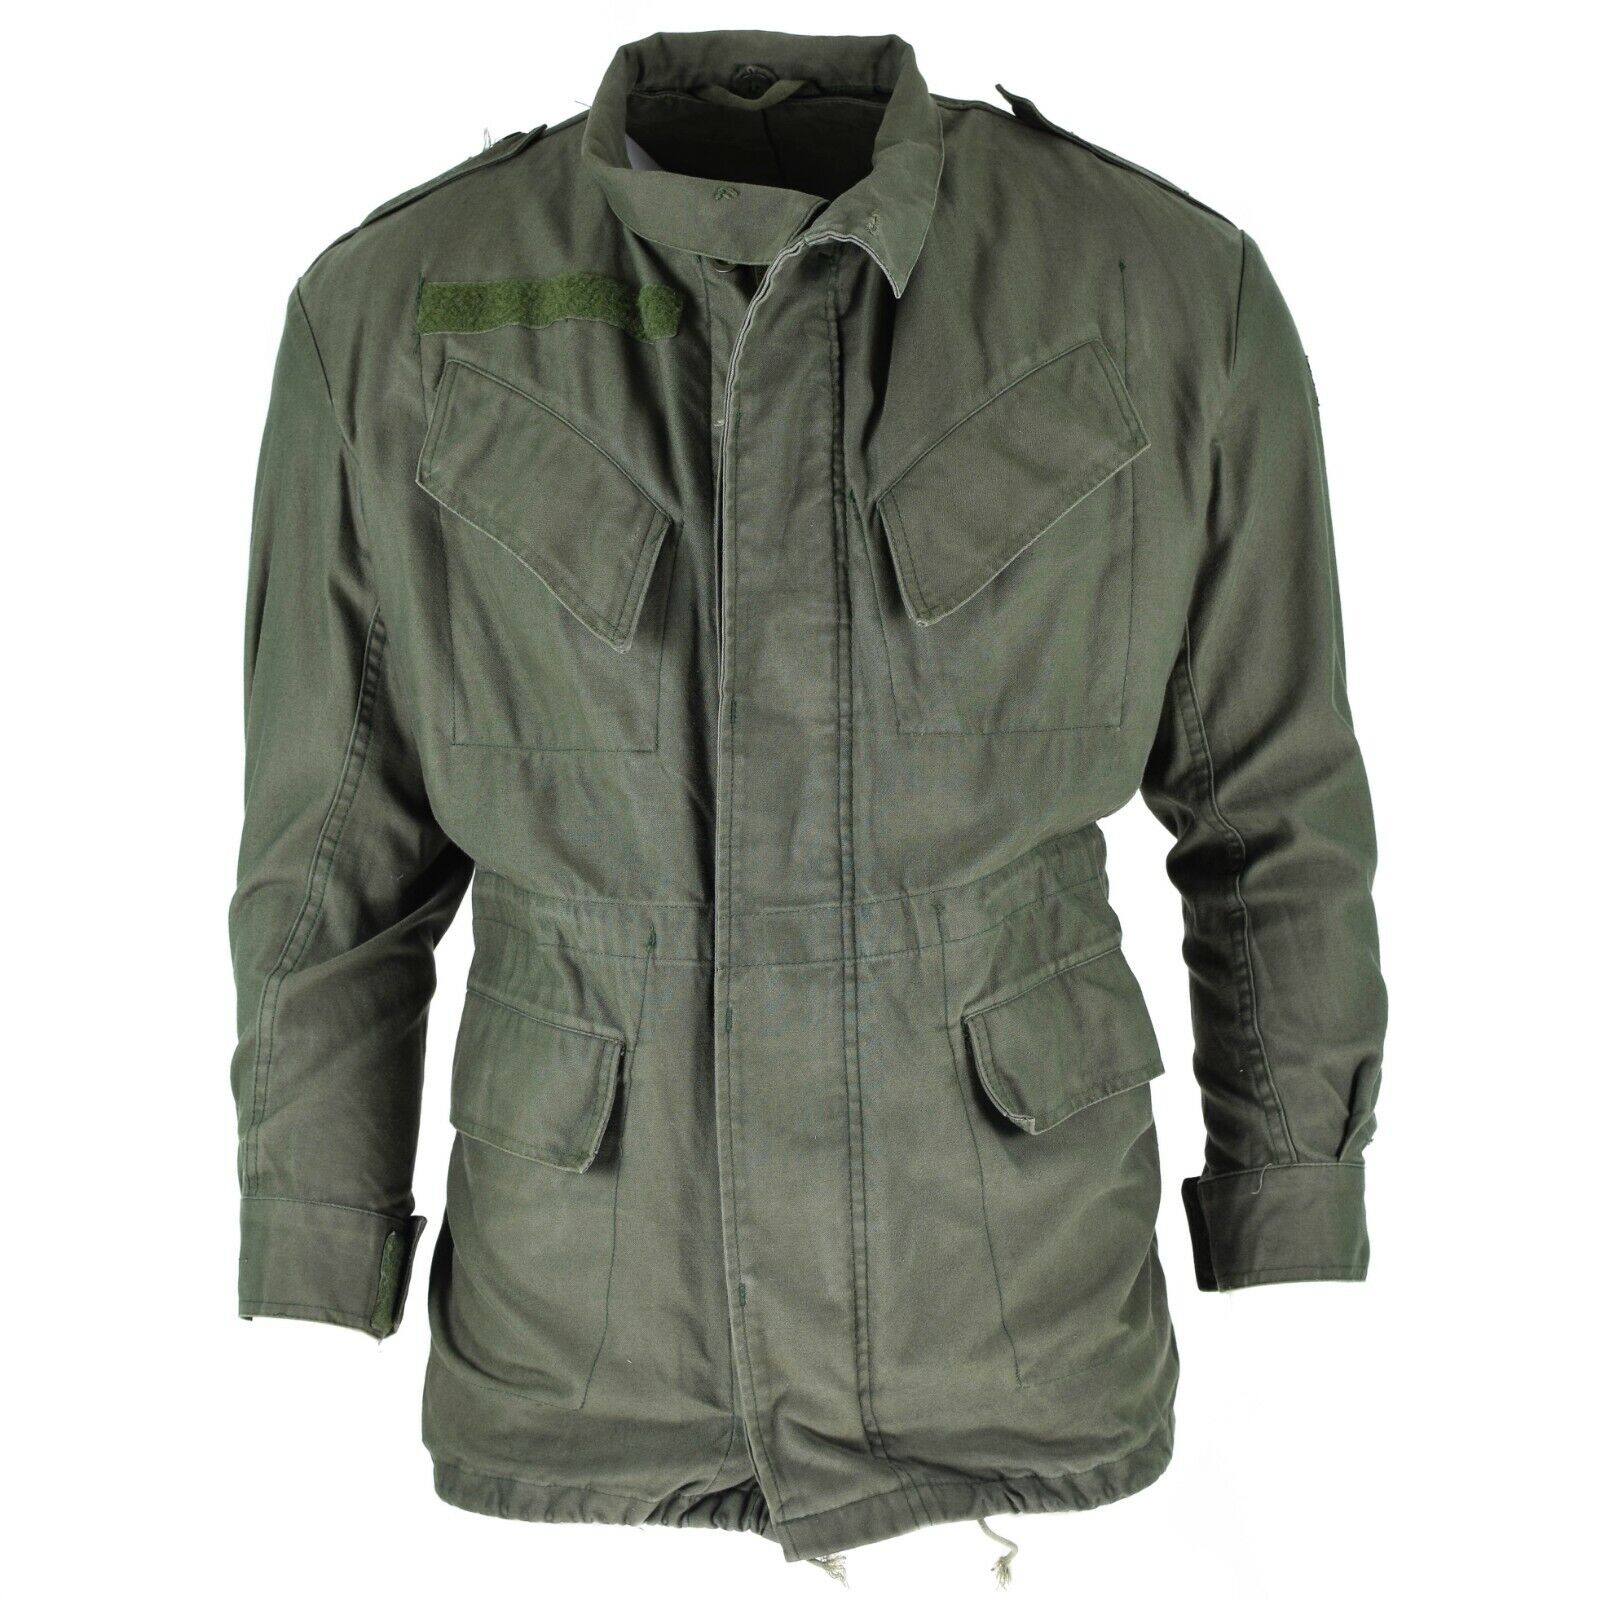 The Perfect Jacket : M-65 | Bushcraft USA Forums